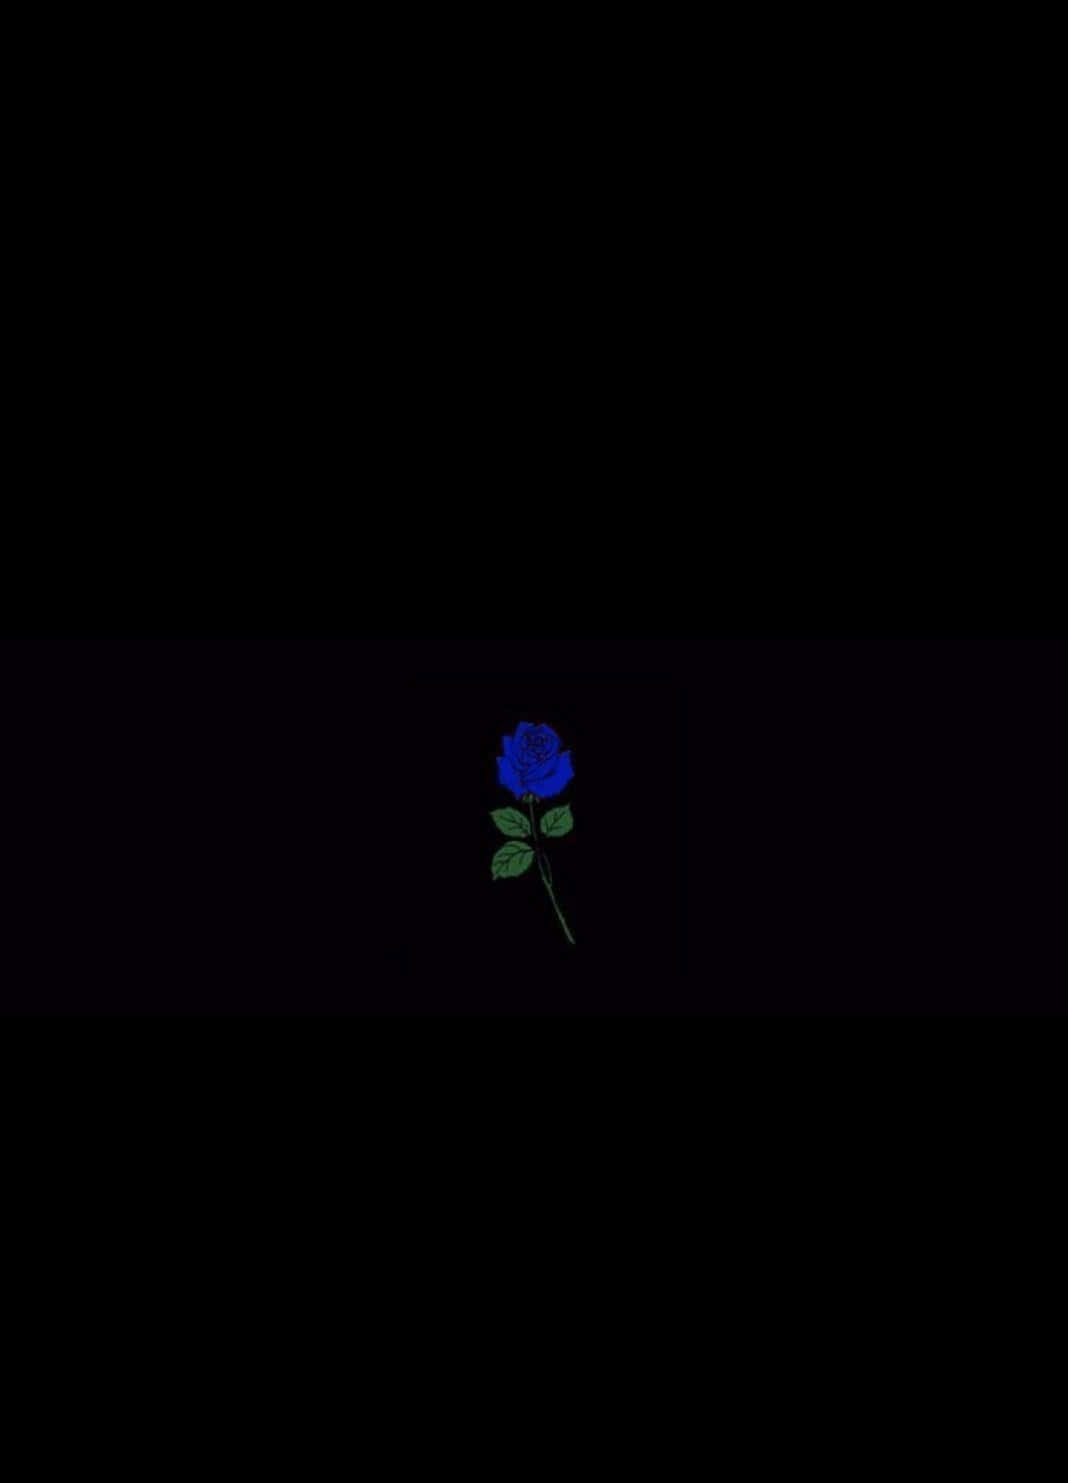 A Blue Rose On A Black Background